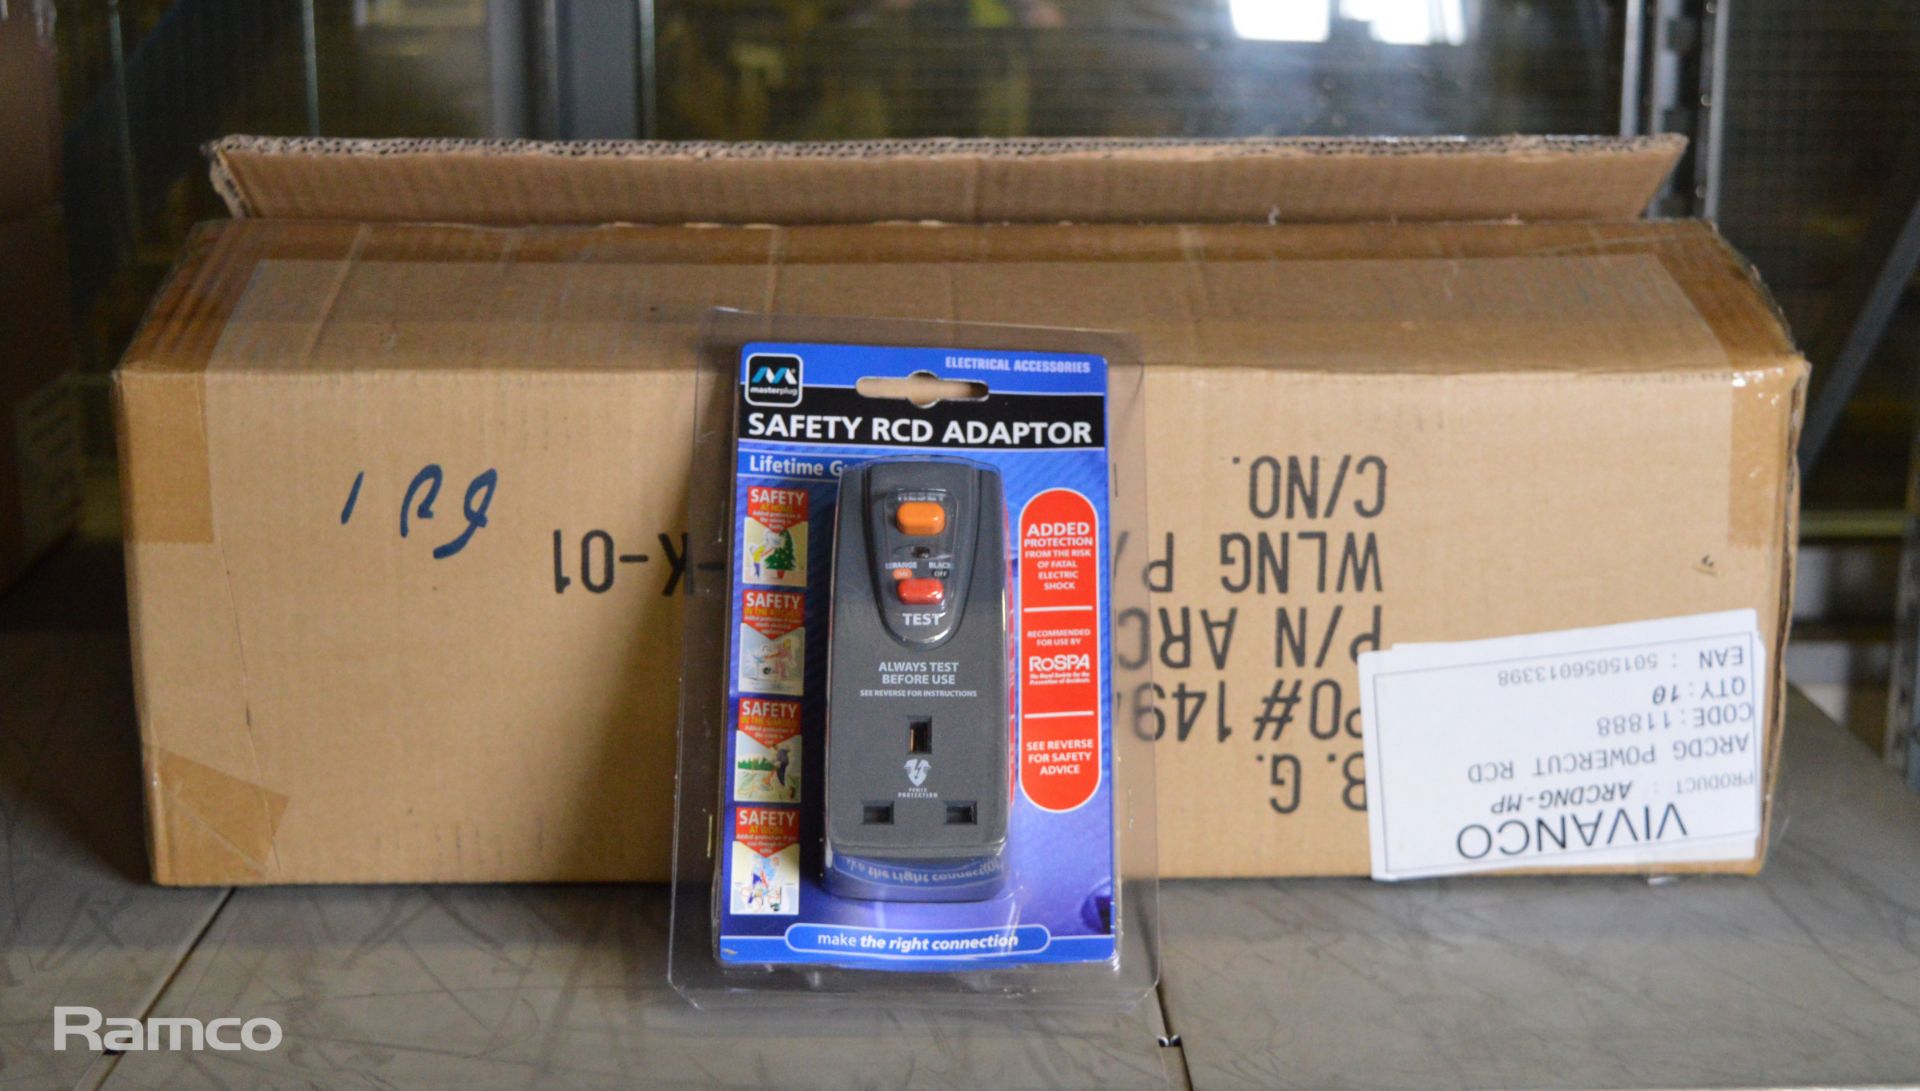 Masterplug Safety RCD Adaptor Plugs 10 Per Box - 1 box